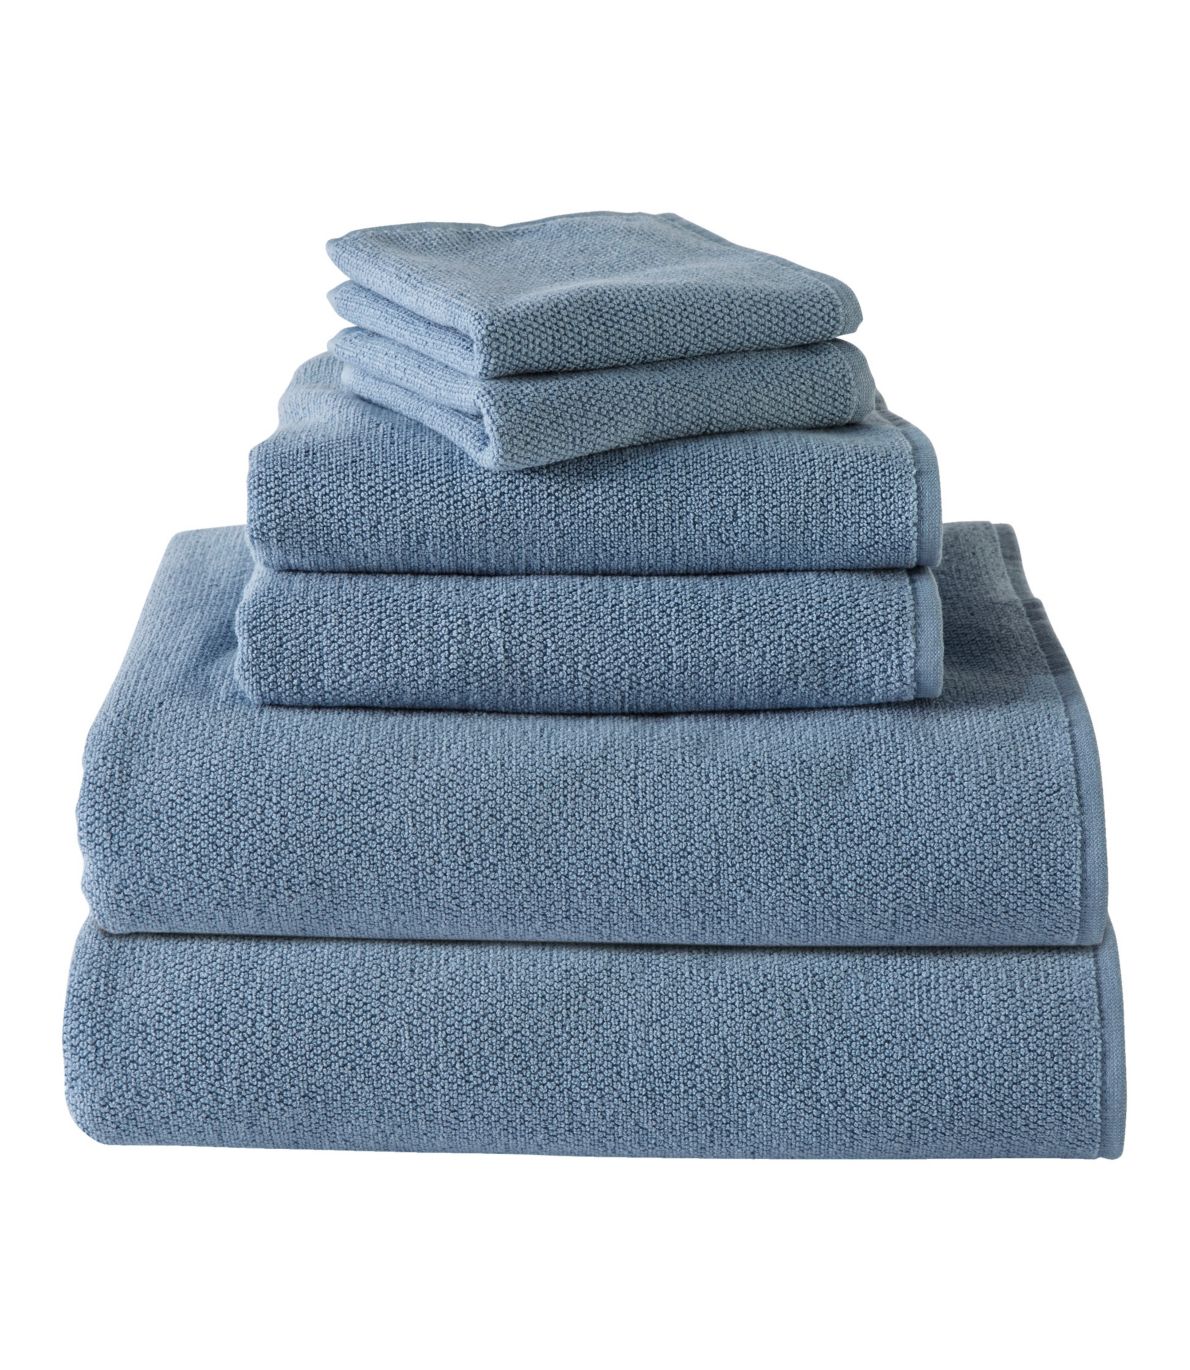 Organic Textured Cotton Towel Set